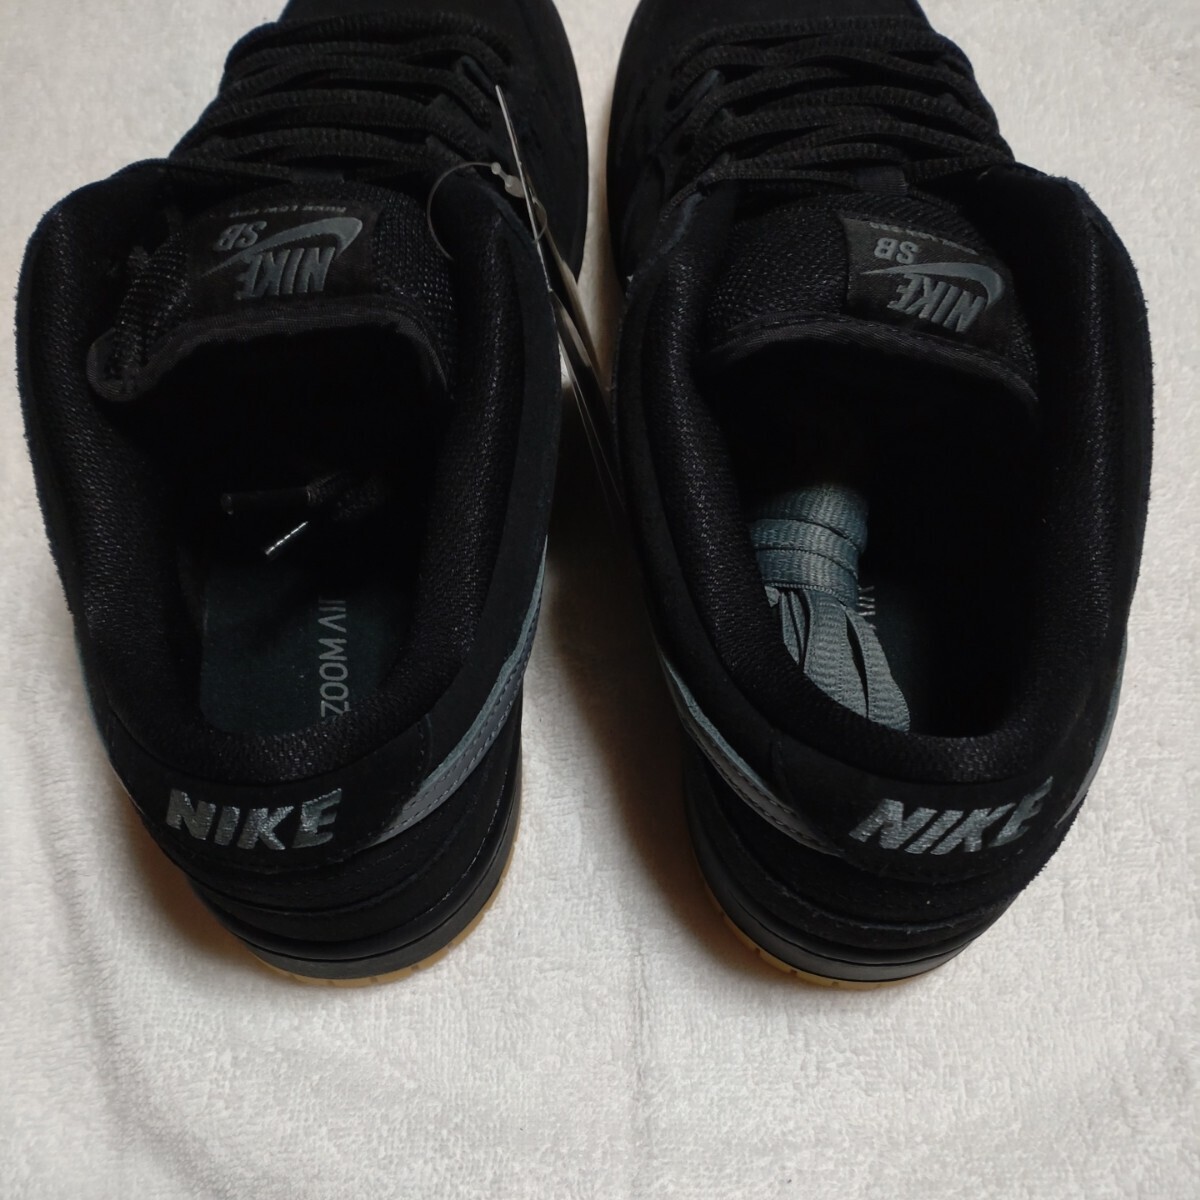 Nike SB Dunk Low Pro "Black/Fog" ナイキ SB ダンク ロー プロ "ブラック/フォグ" 未着用品 27.5cm_画像6